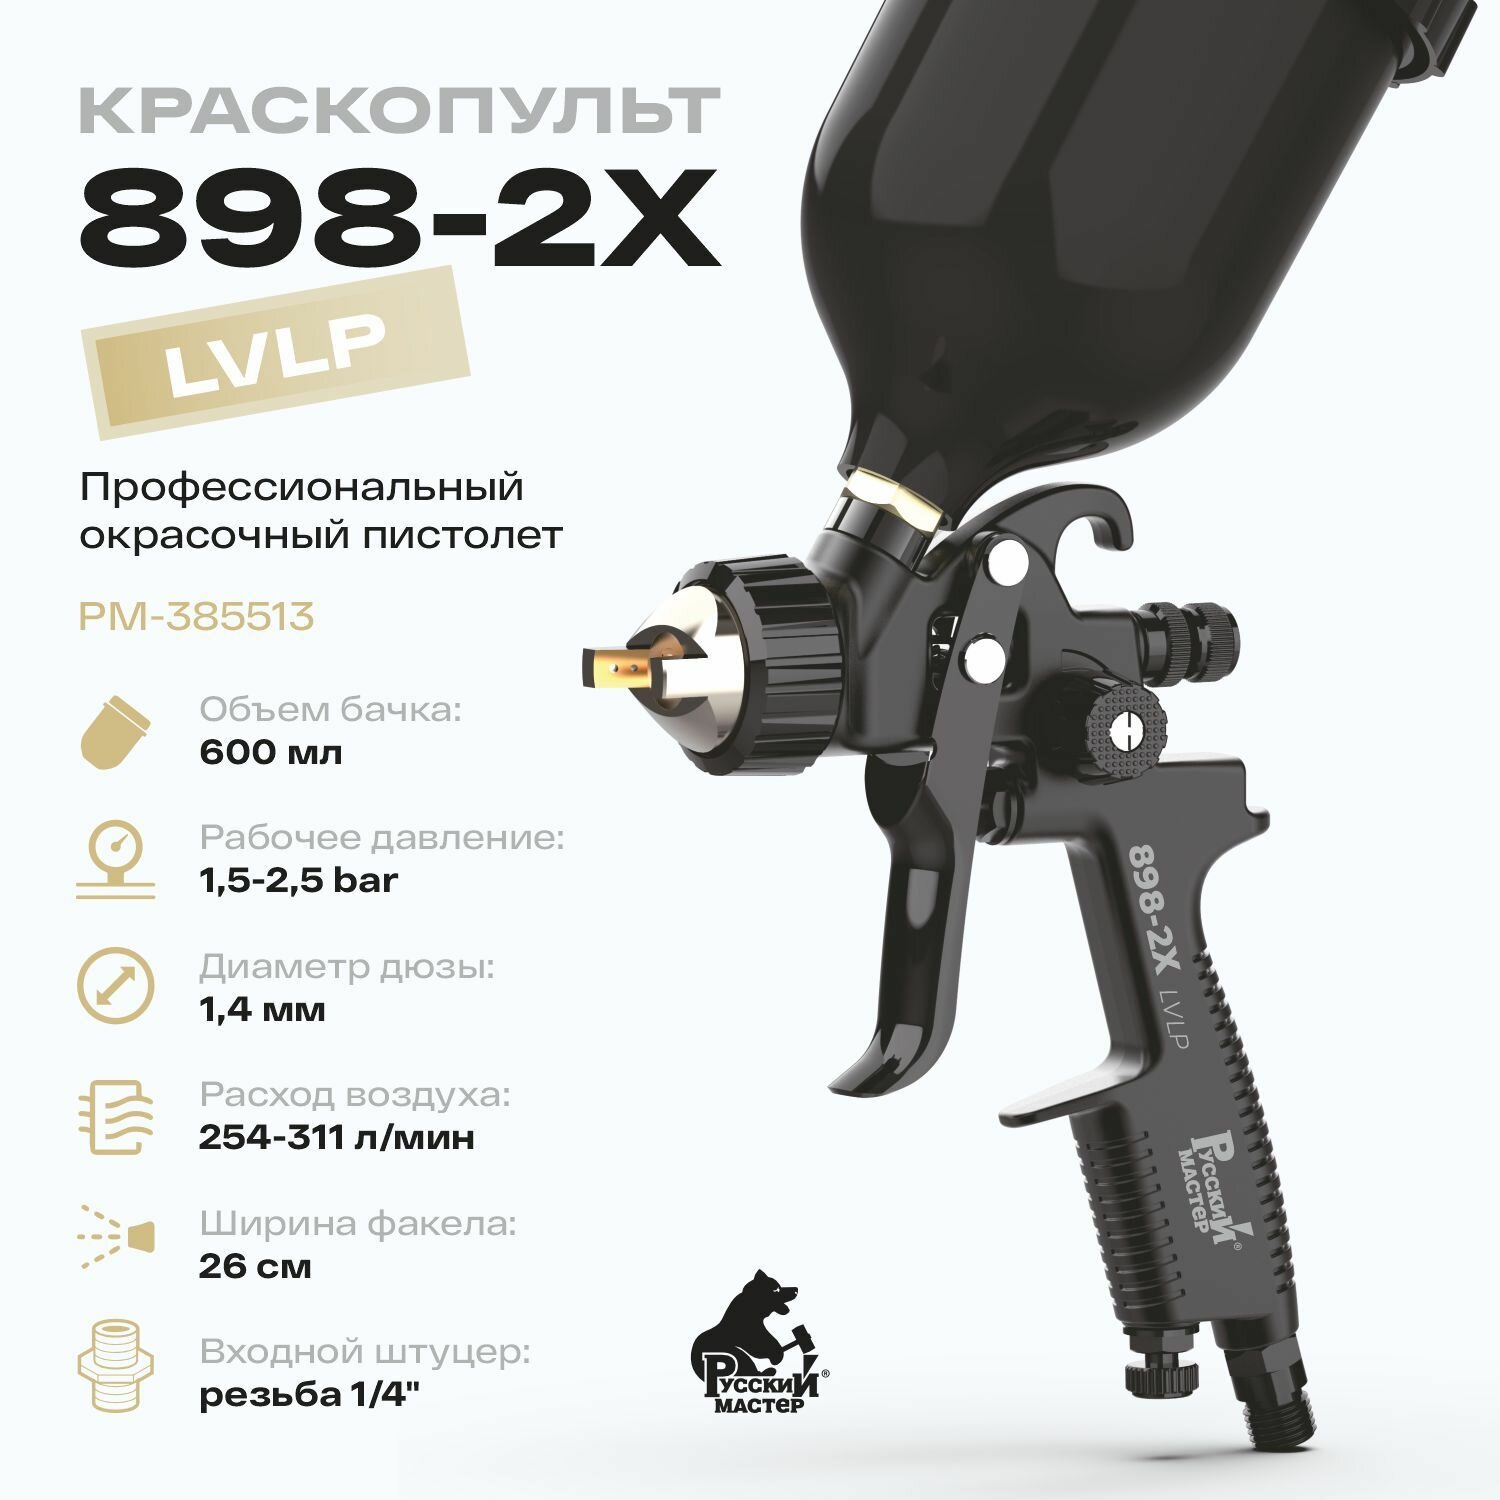 Краскопульт Русский Мастер 898-2X LVLP (1.4мм) РМ-385513 с верхним бачком